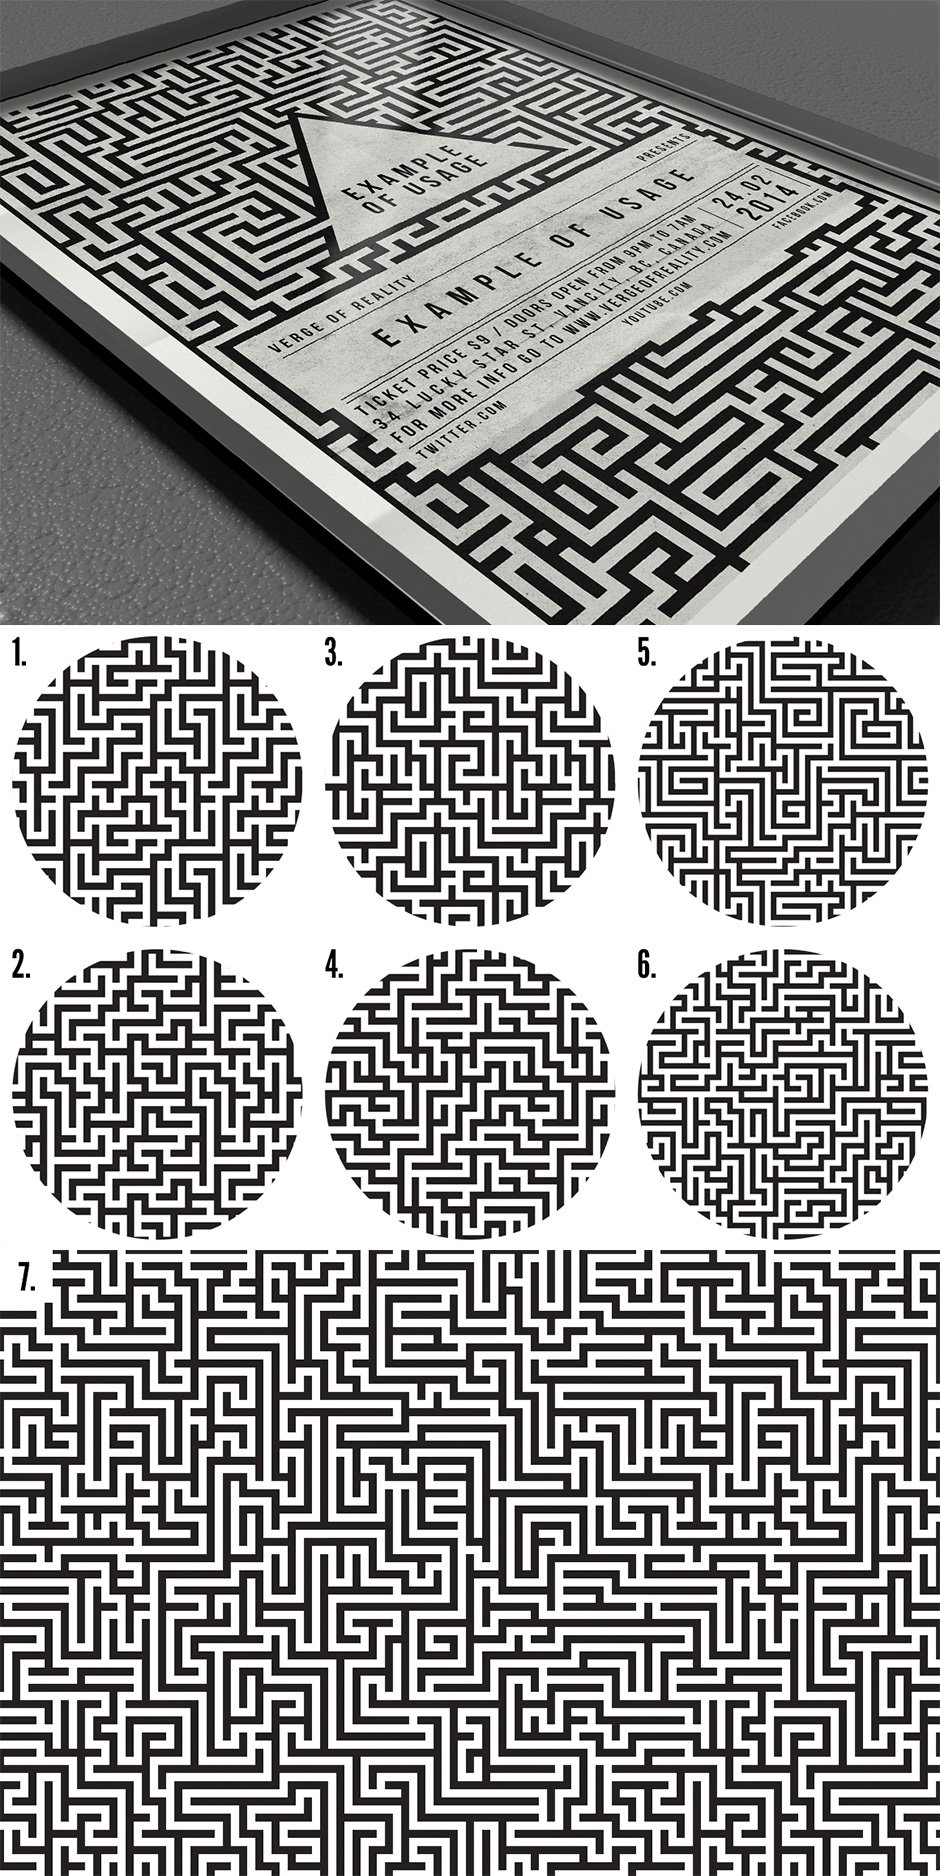 Maze Patterns